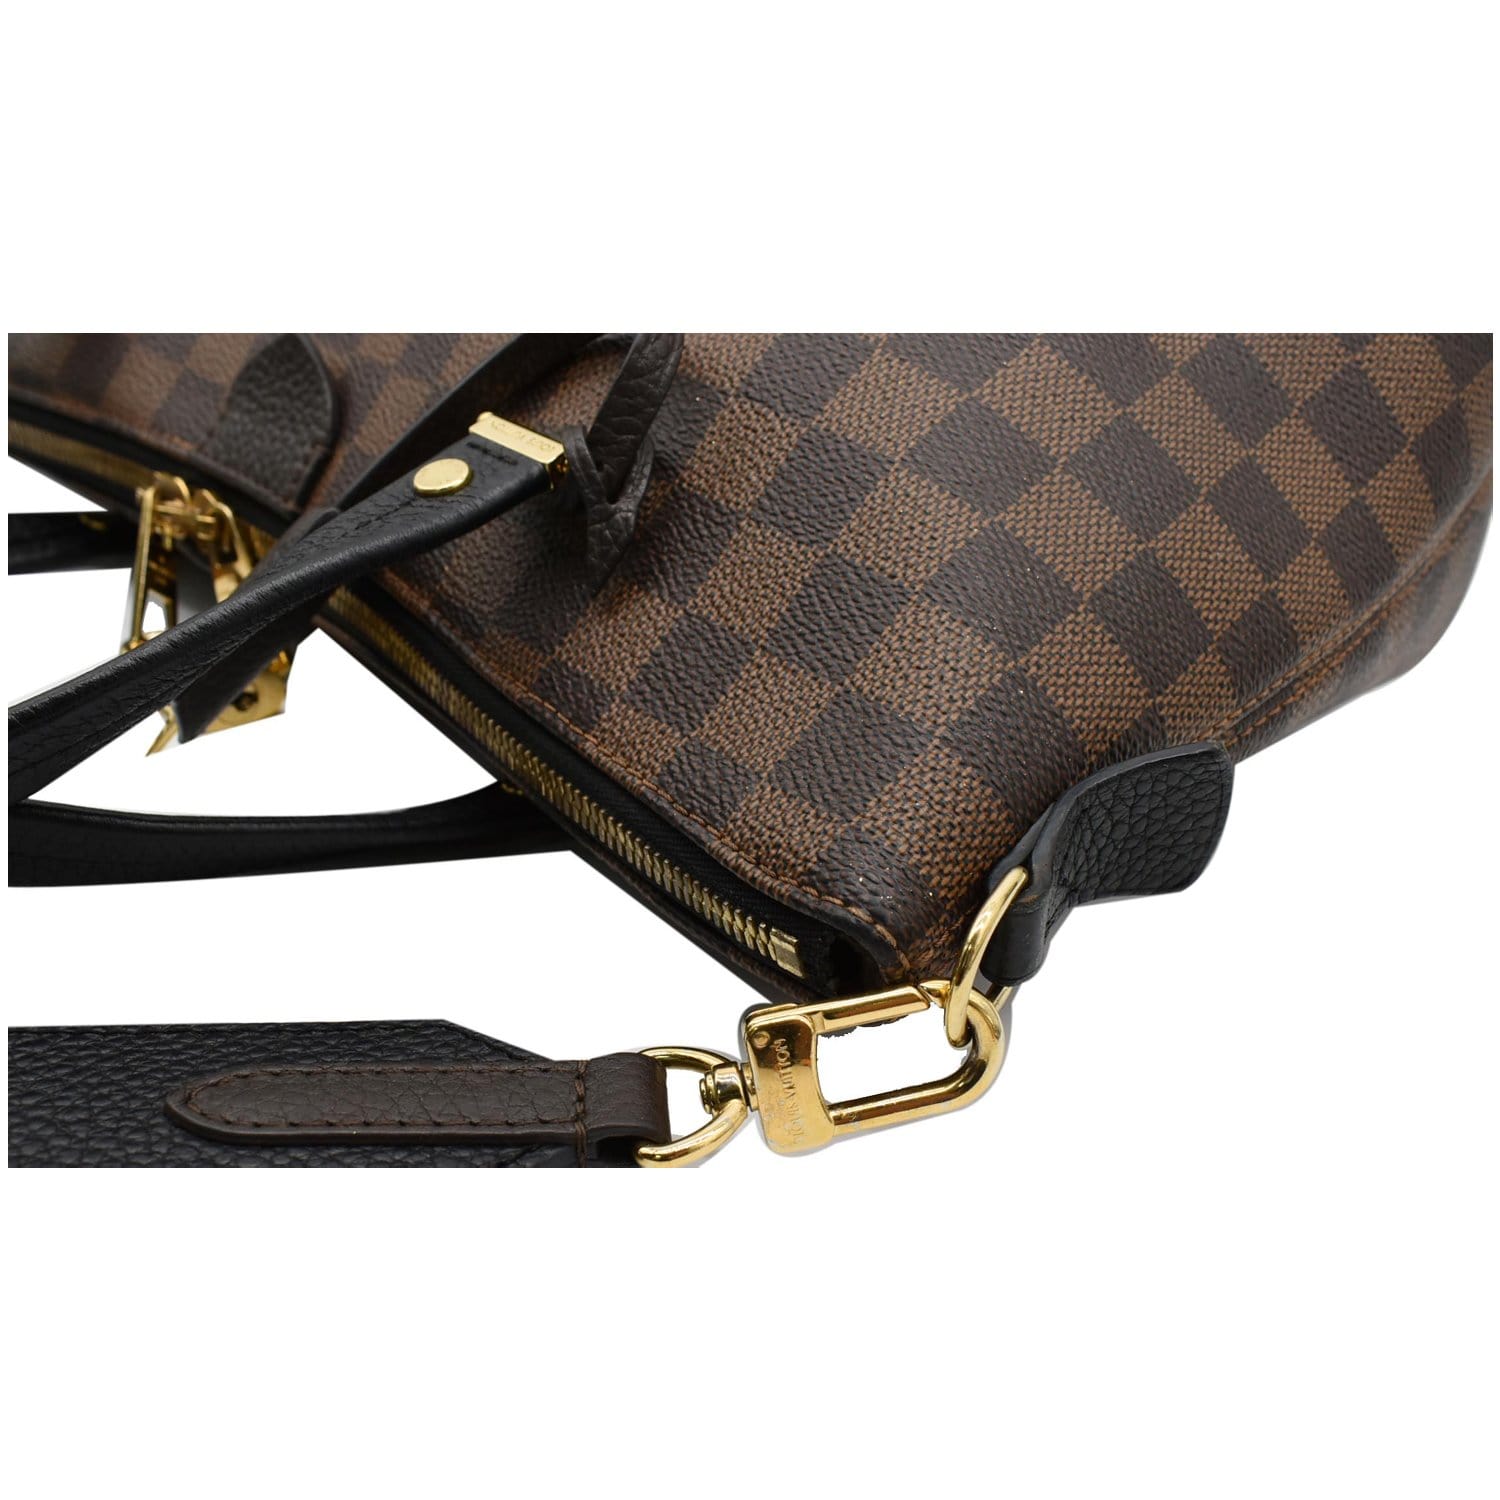 Louis Vuitton Hyde Park Handbag Damier